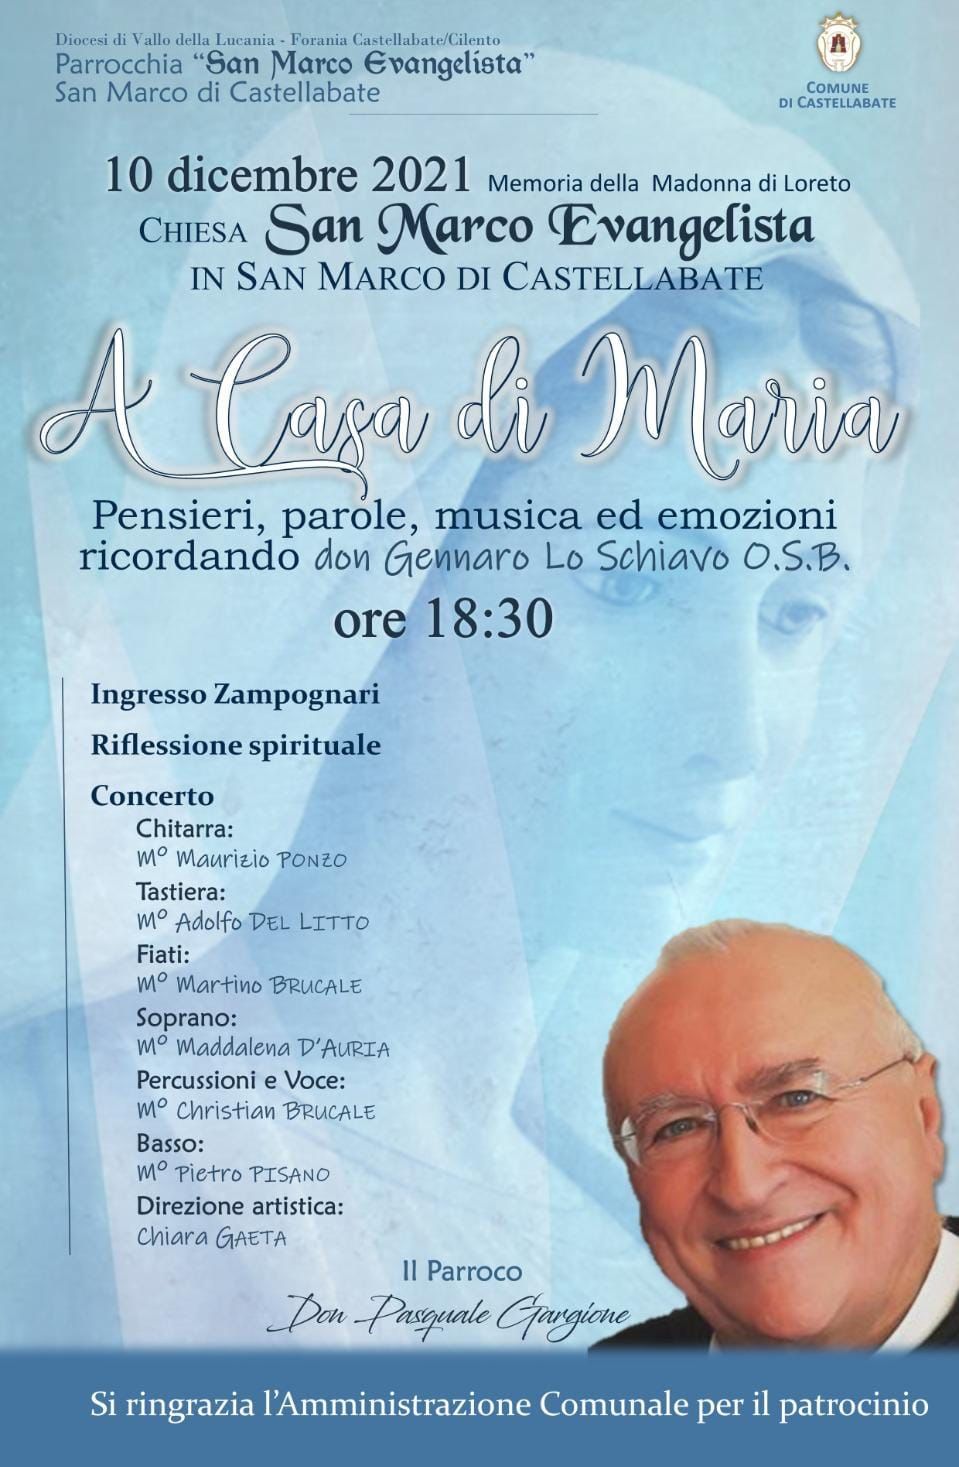 San Marco di Castellabate: concerto “A Casa di Maria” ricordando don Gennaro Lo Schiavo